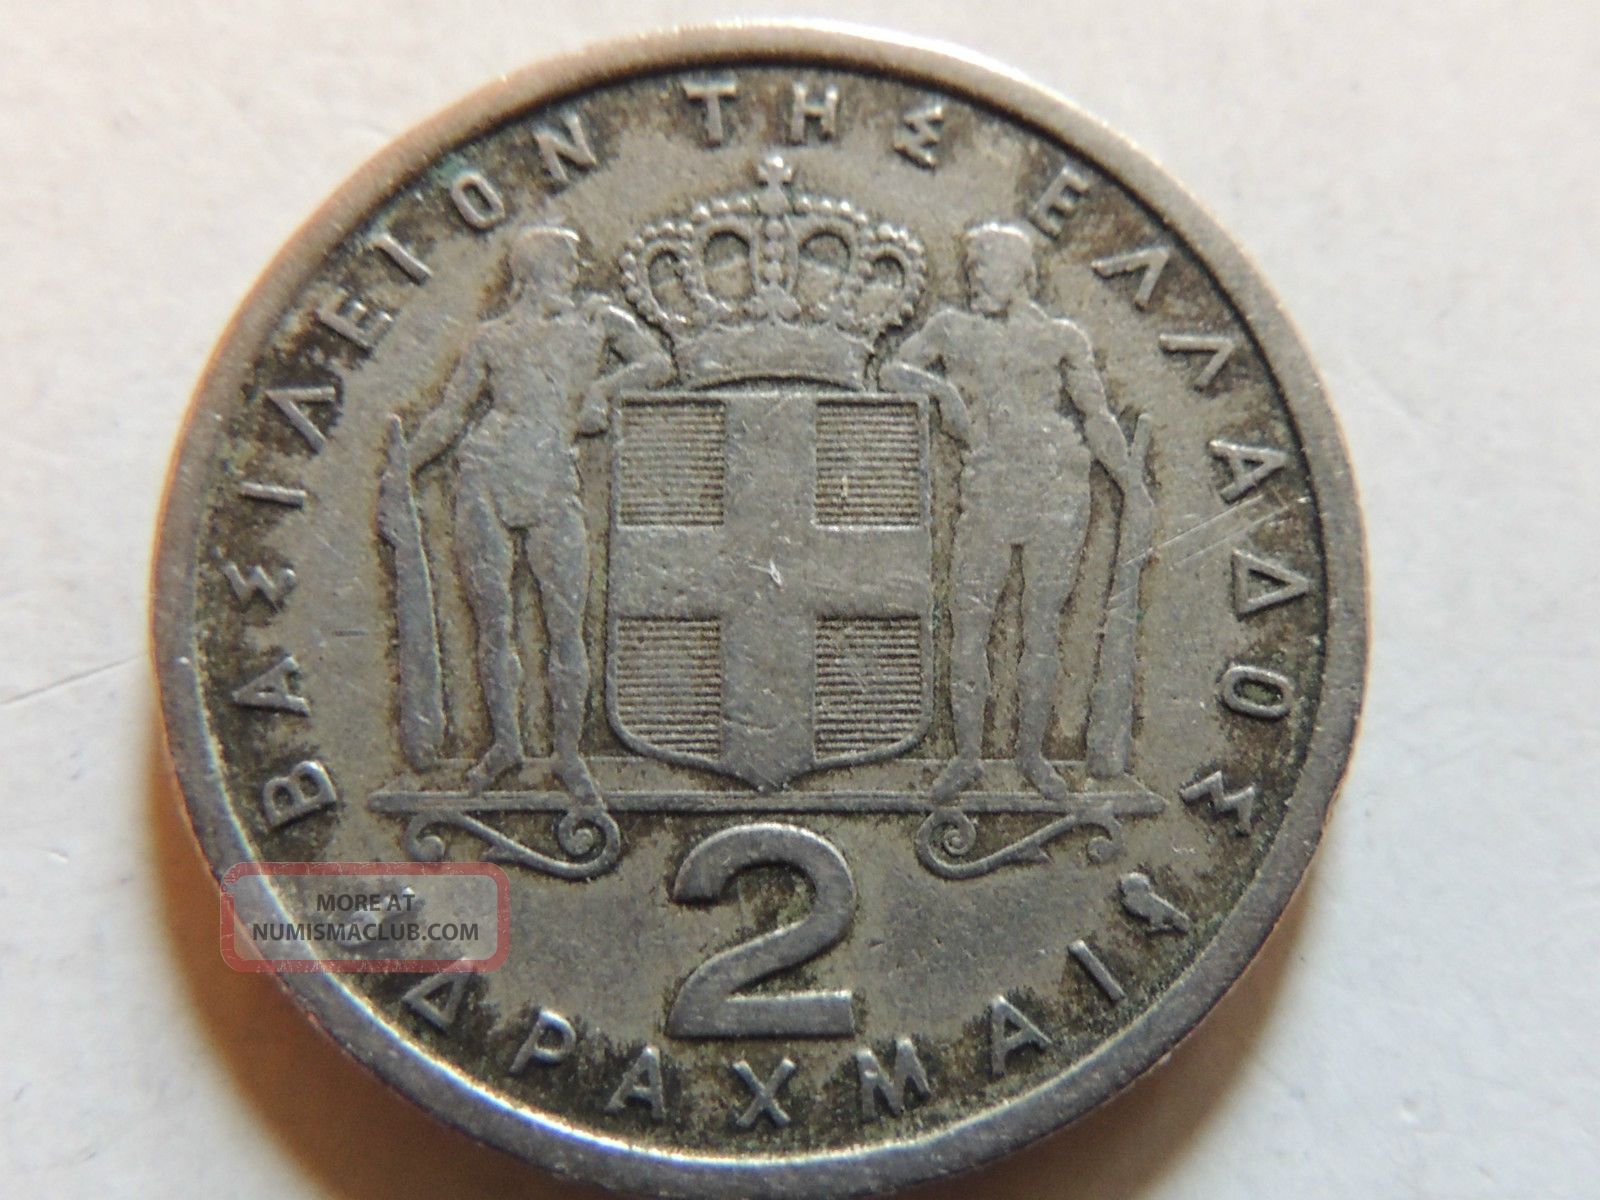 1959 Greek Two Drachma Coin